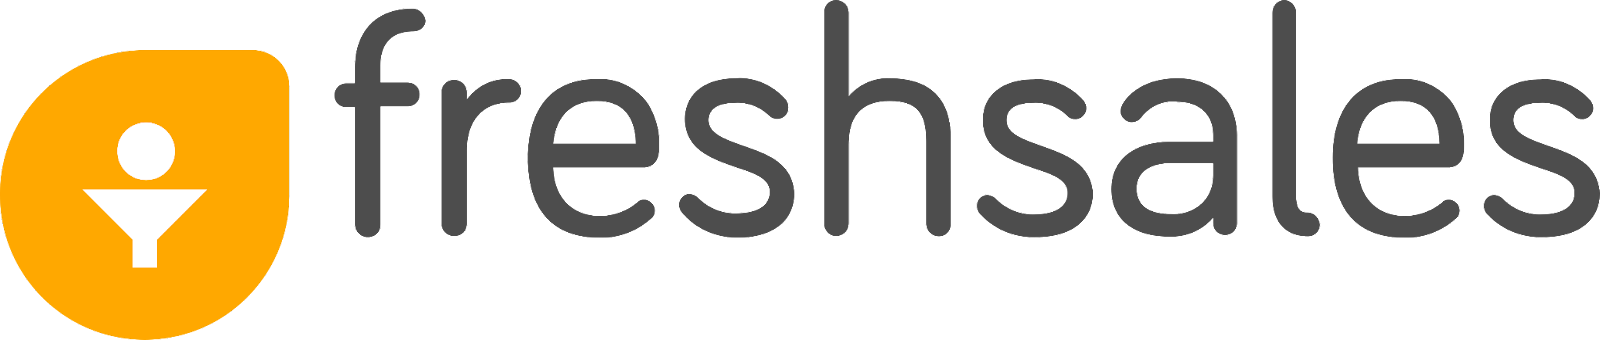 ContractHero Logo